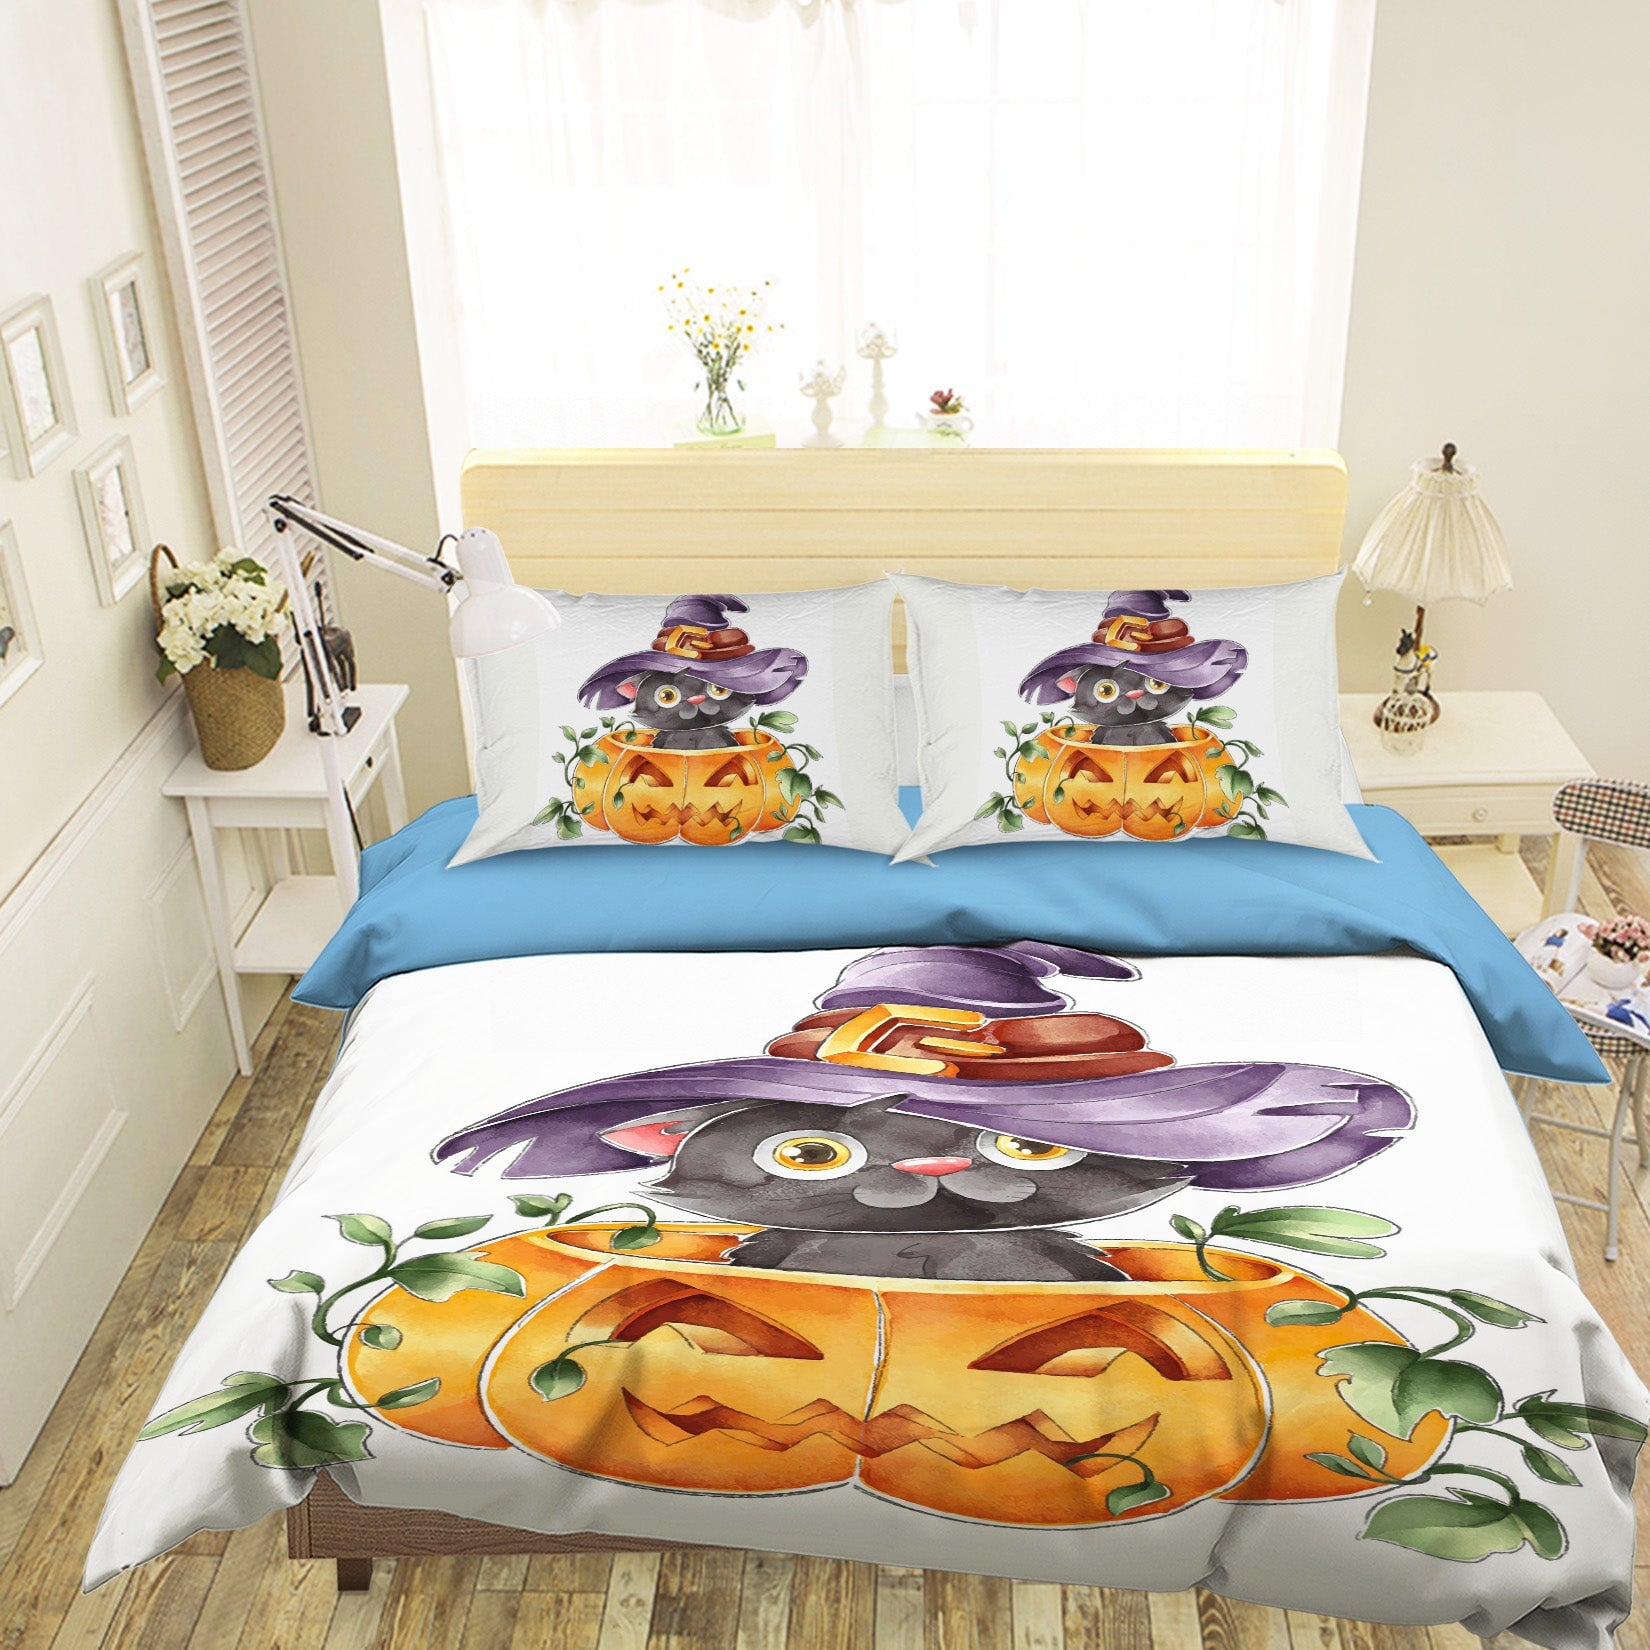 3D Pumpkin Black Cat 1206 Halloween Bed Pillowcases Quilt Quiet Covers AJ Creativity Home 